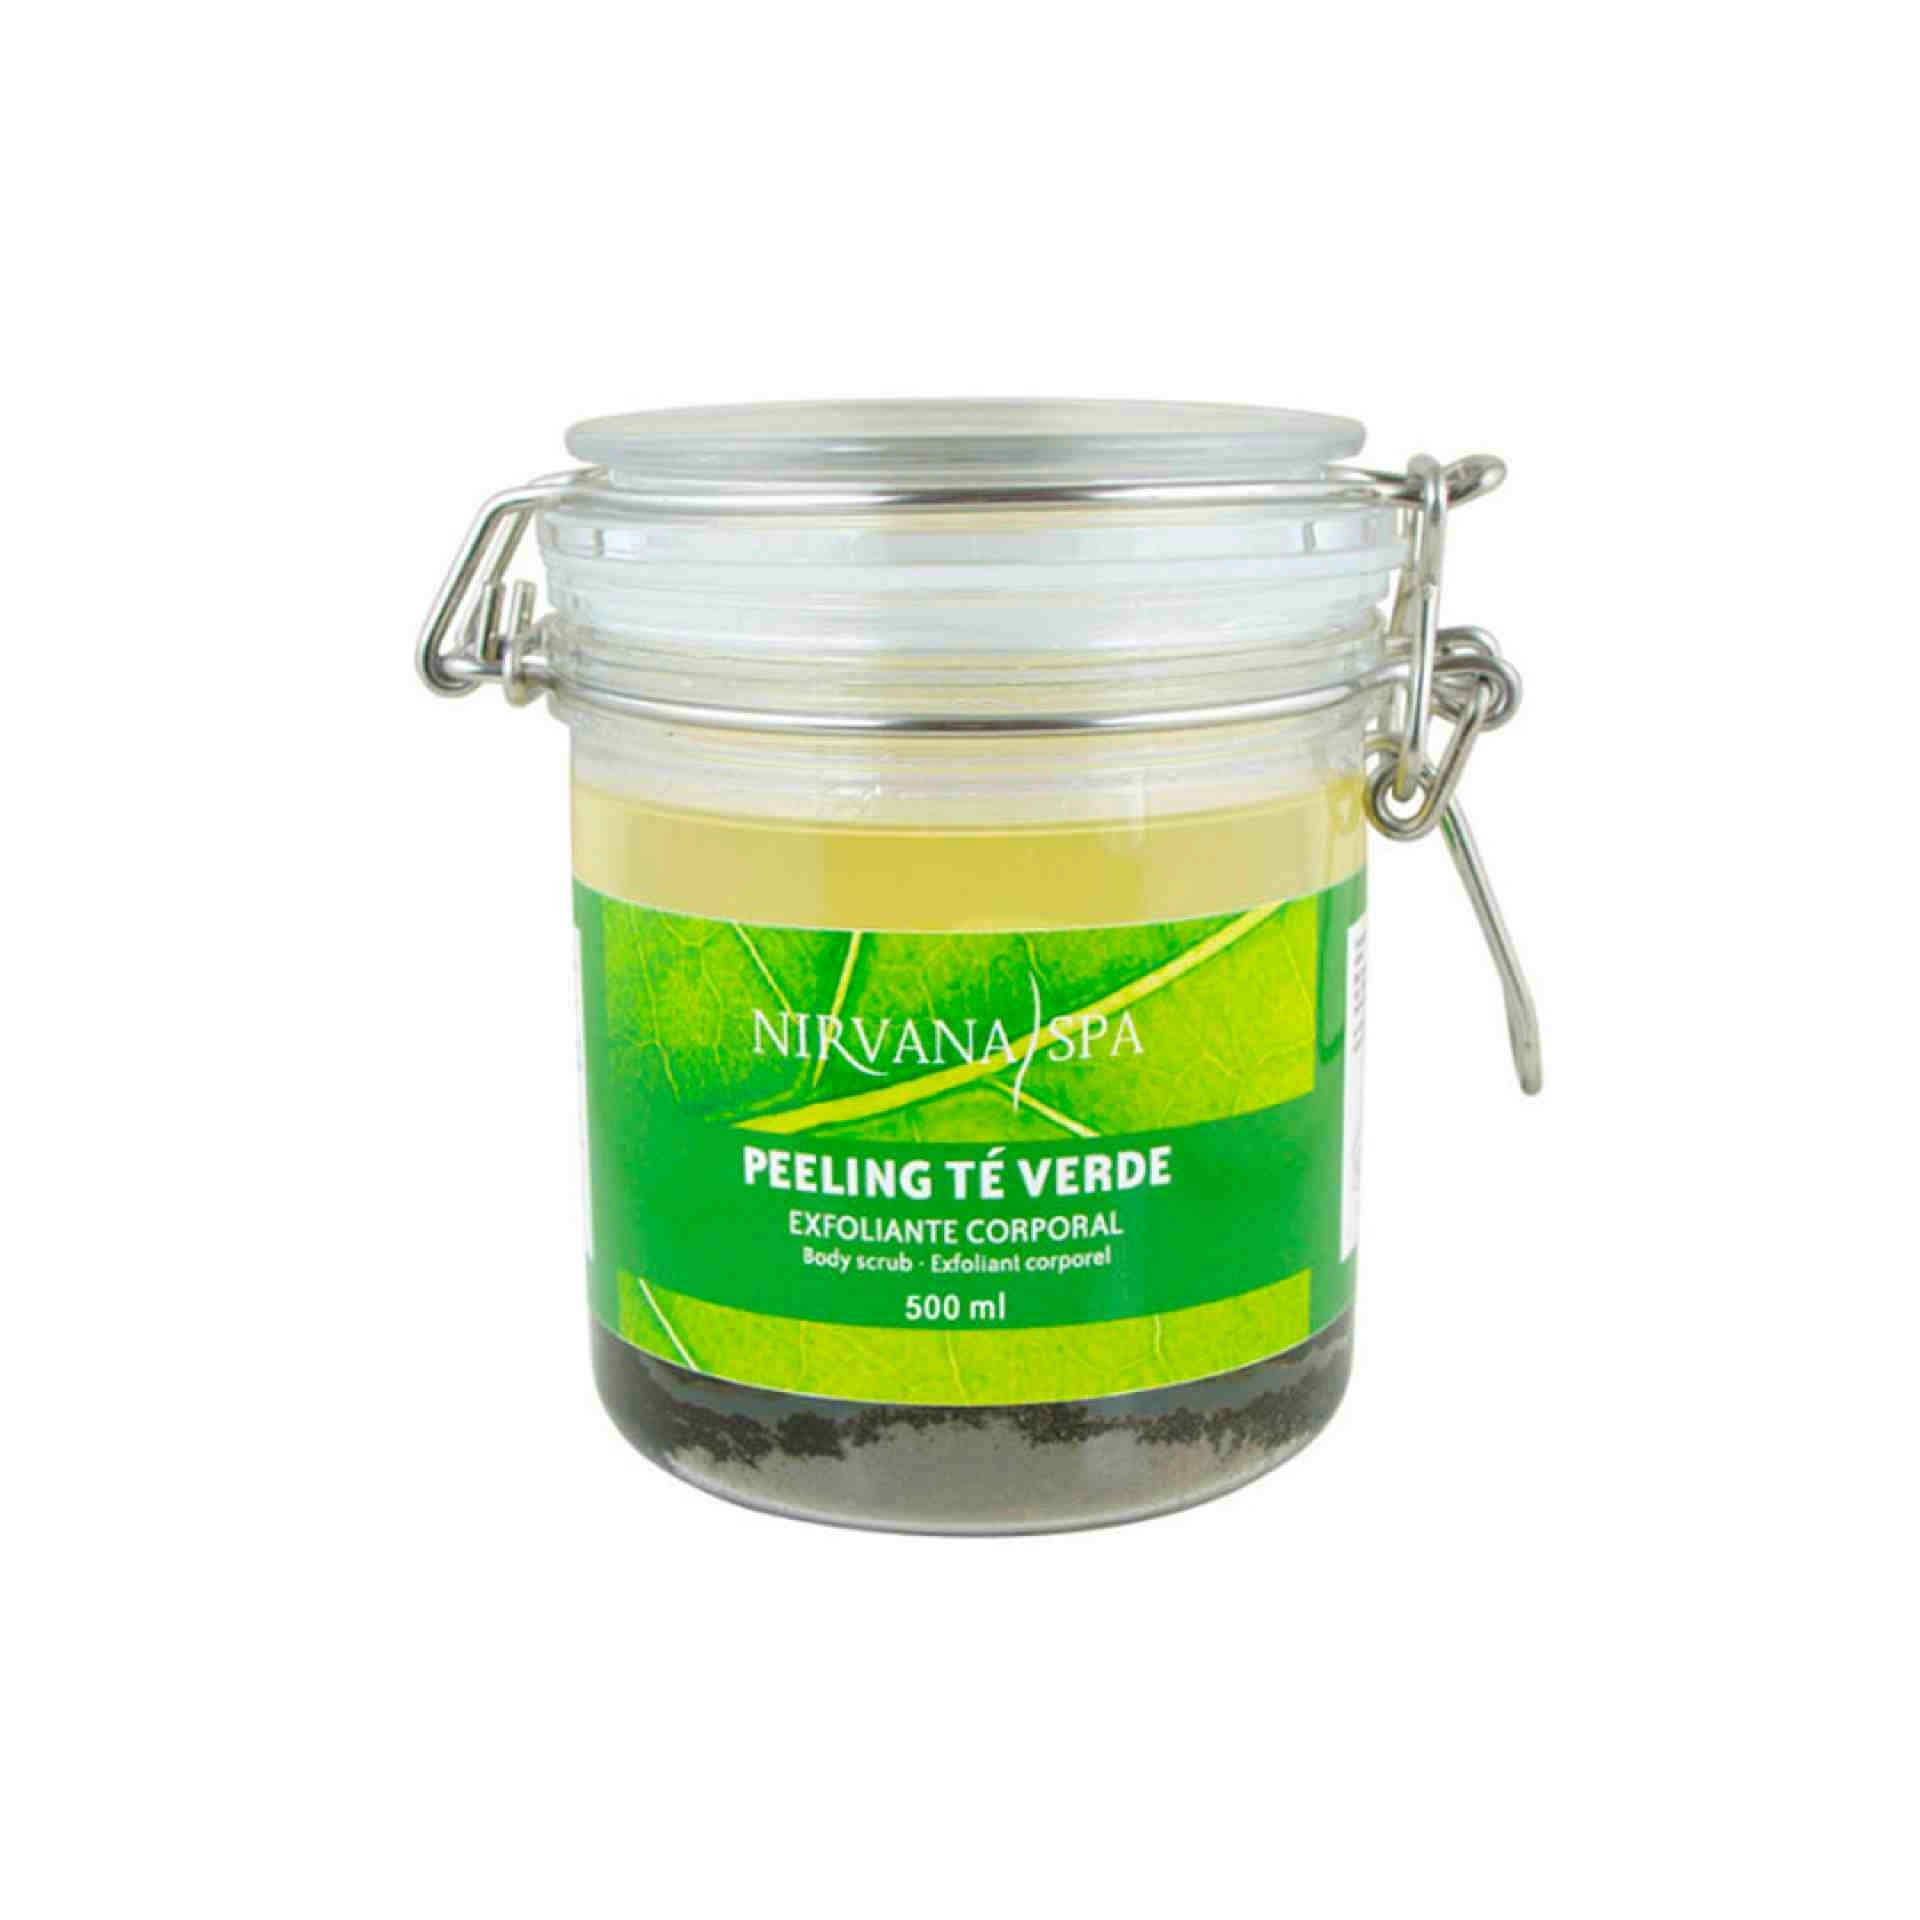 Peeling Té Verde | Exfoliante corporal de Té Verde 500ml - Nirvana Spa ®